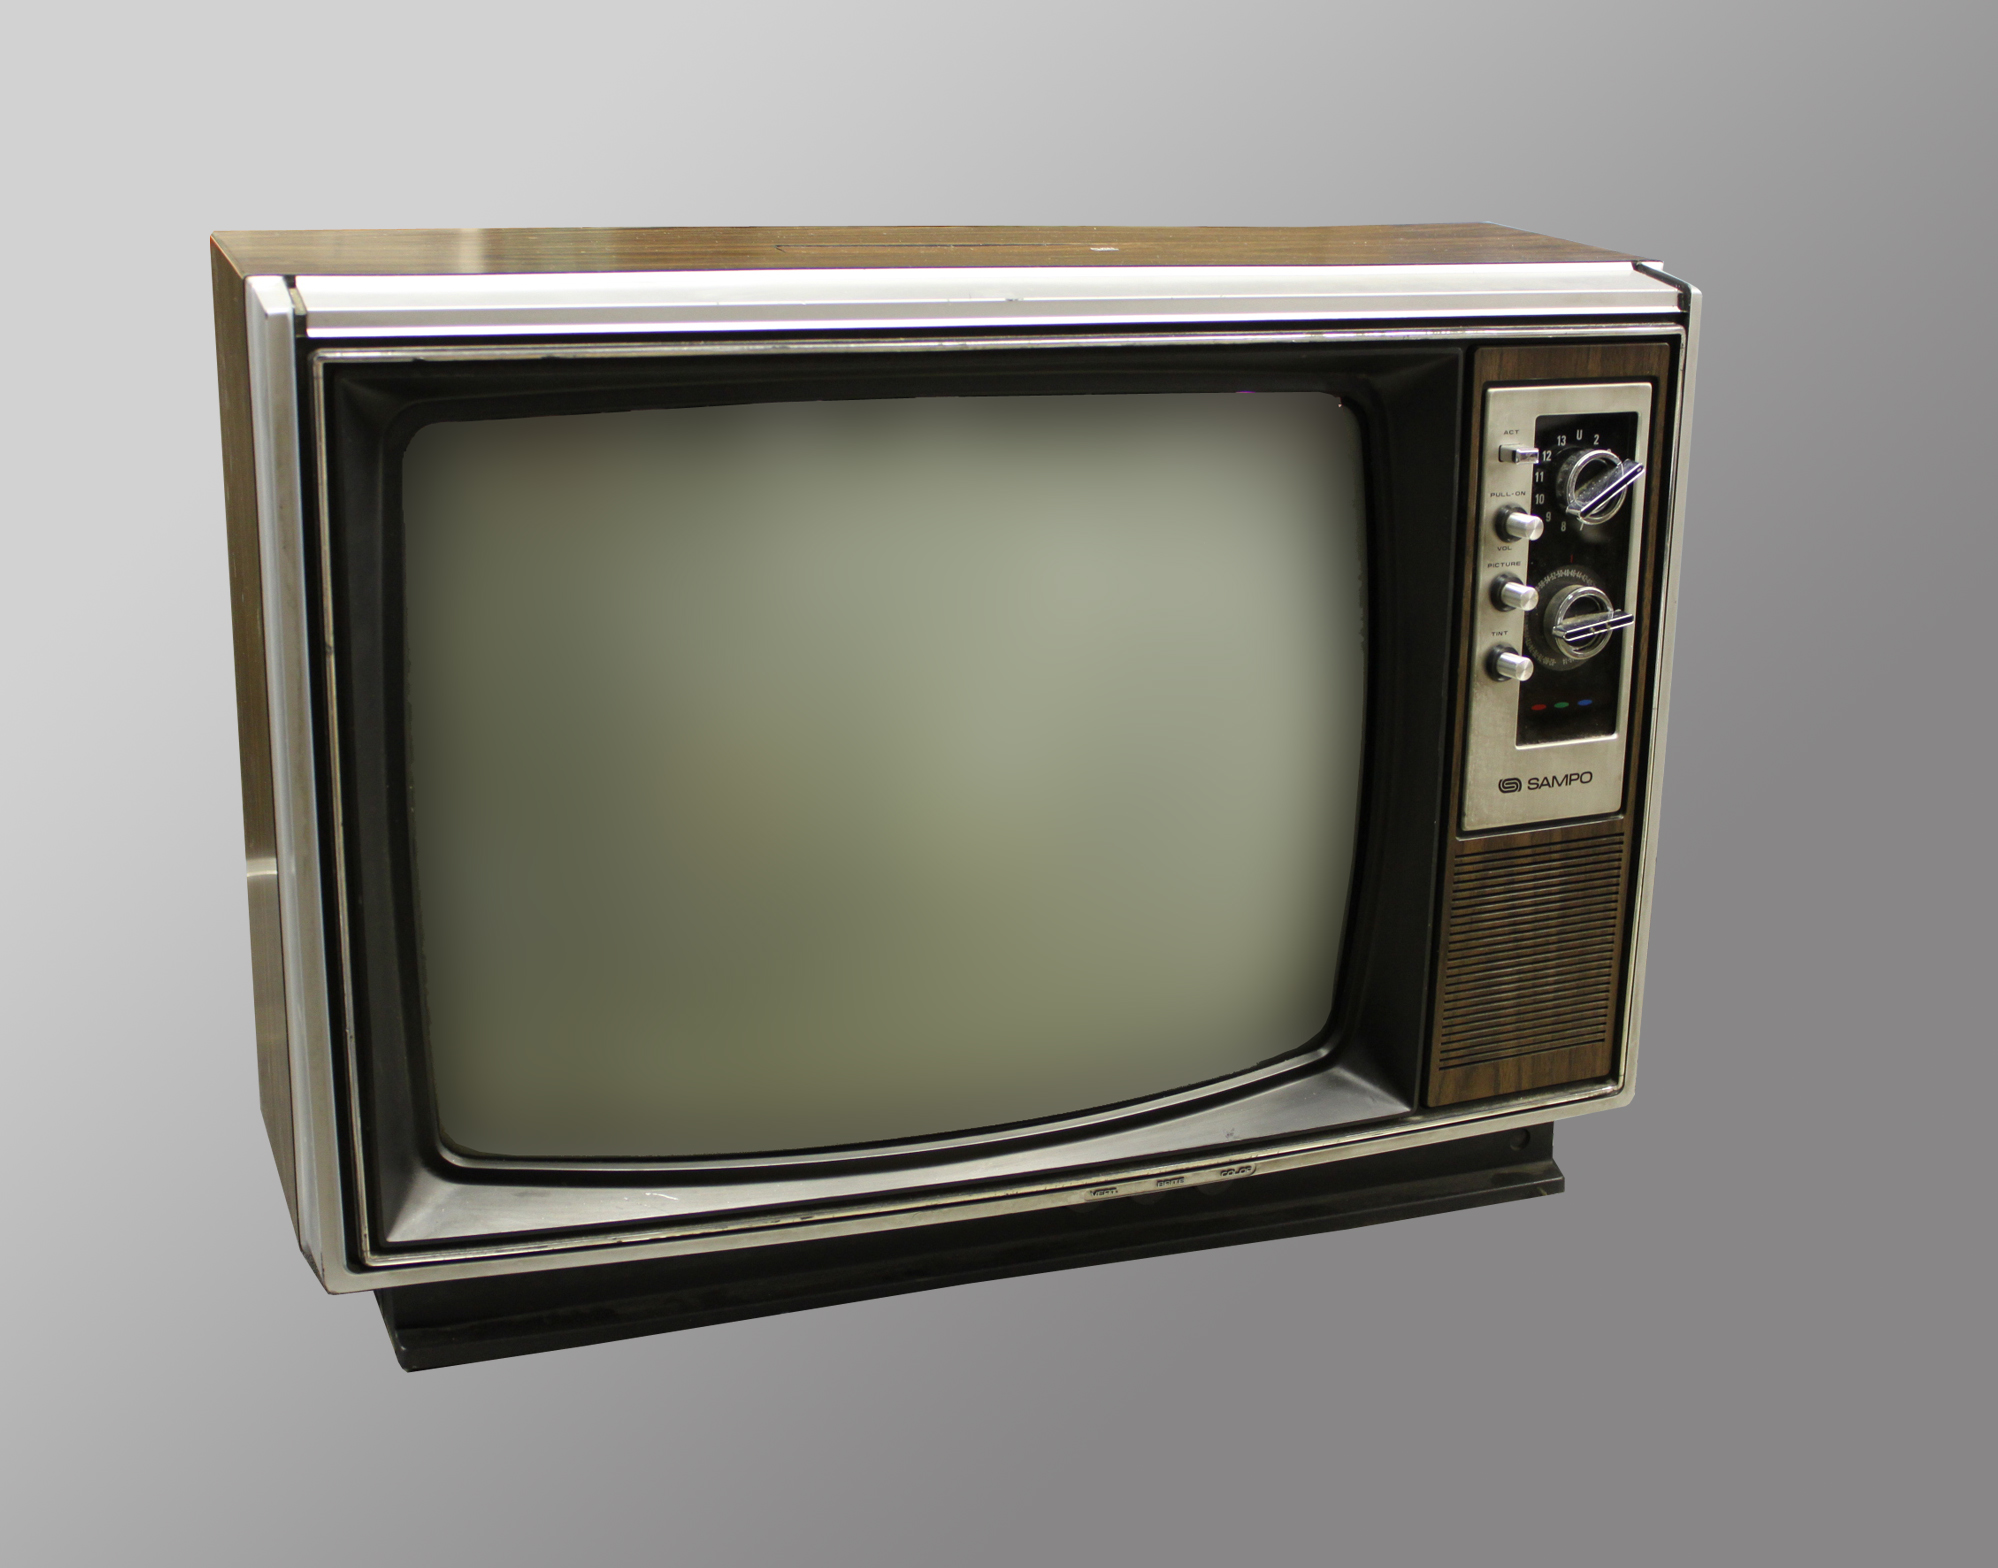 Видимо телевизор. Телевизор 80гц. Телевизор сони 1970 года. Старый американский телевизор. Телевизор 1990.